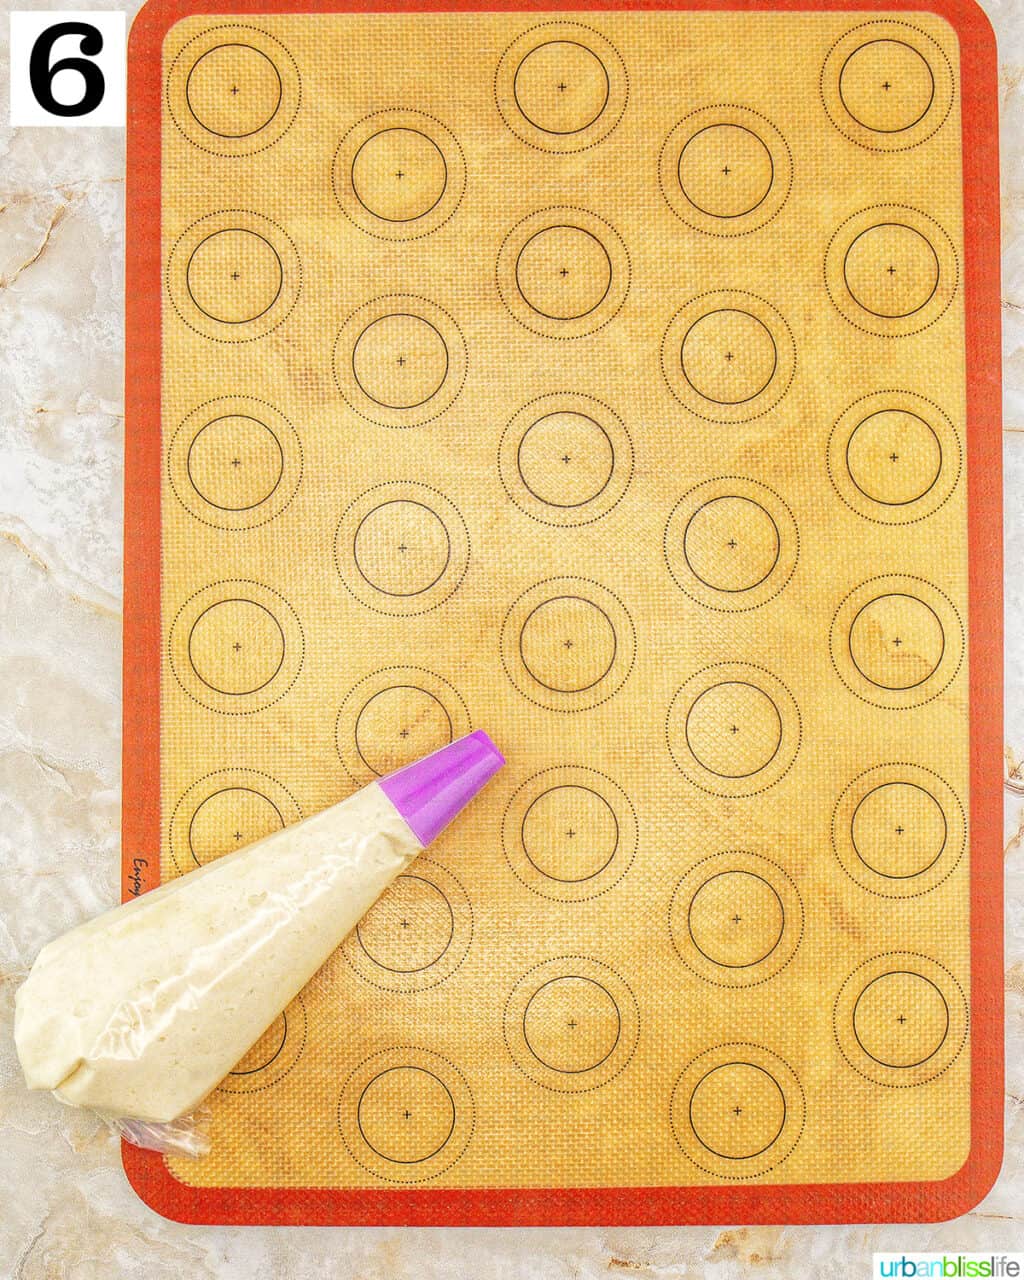 tiramisu macaron batter in a piping bag on top of a silicone macaron mat.